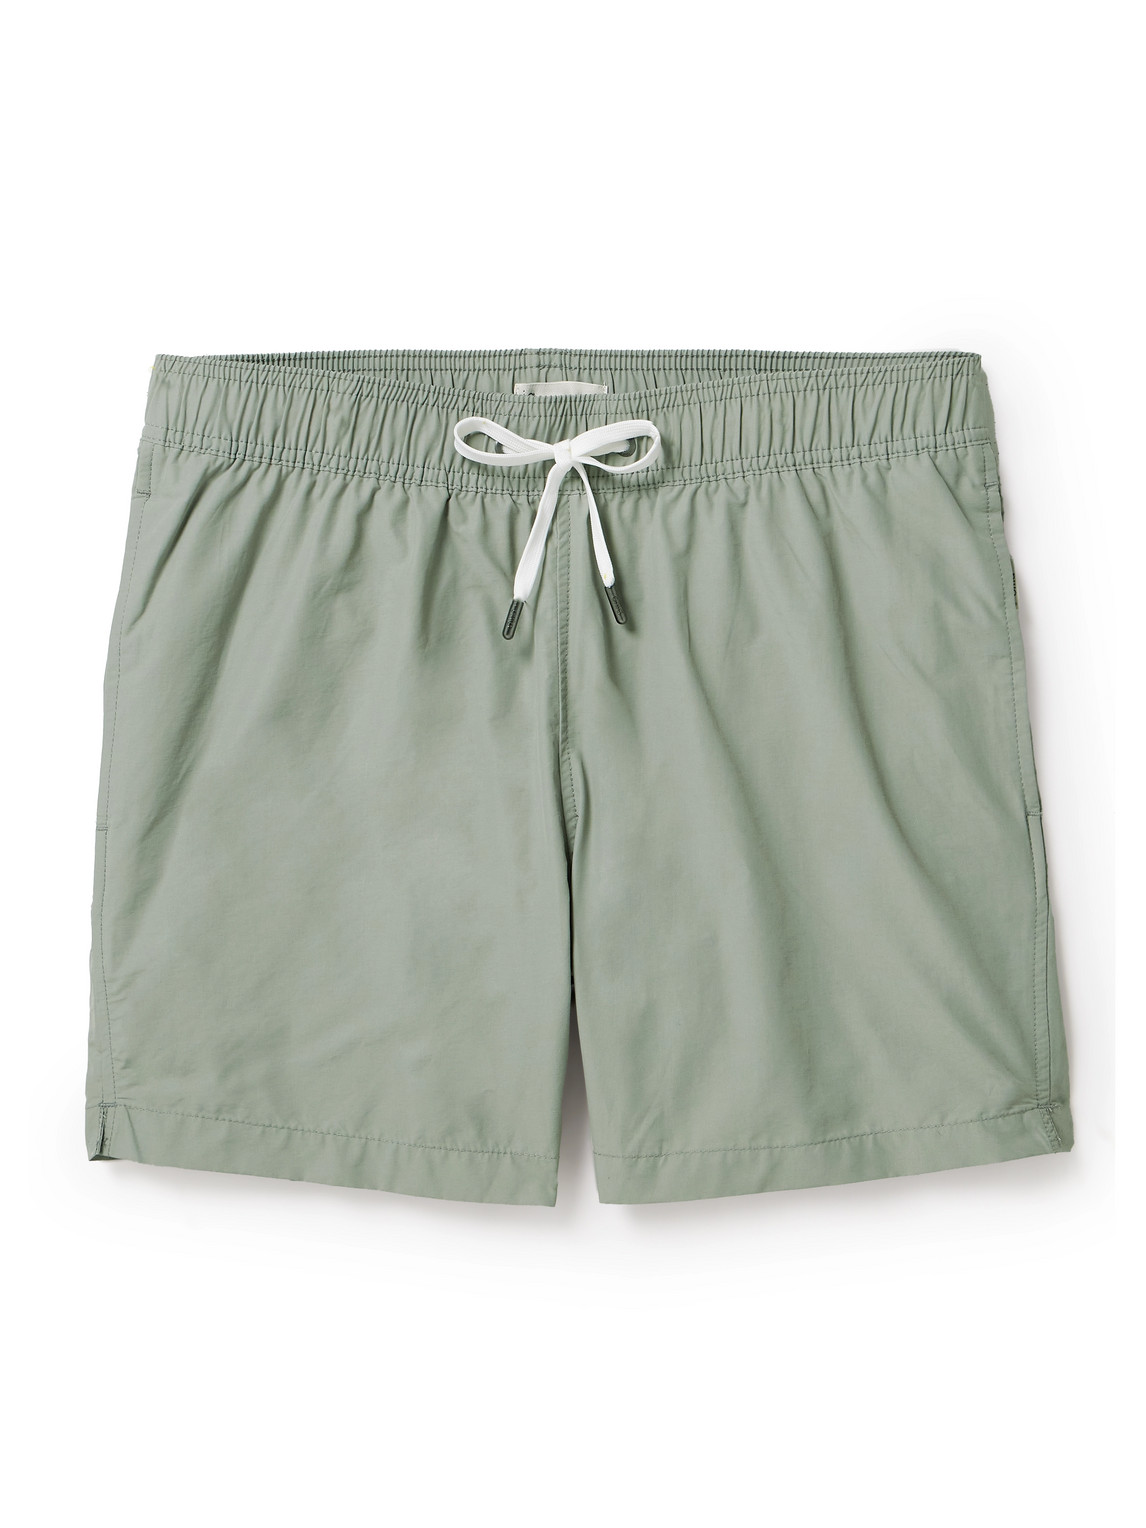 Onia - Charles Straight-Leg Mid-Length Swim Shorts - Men - Green - S von Onia